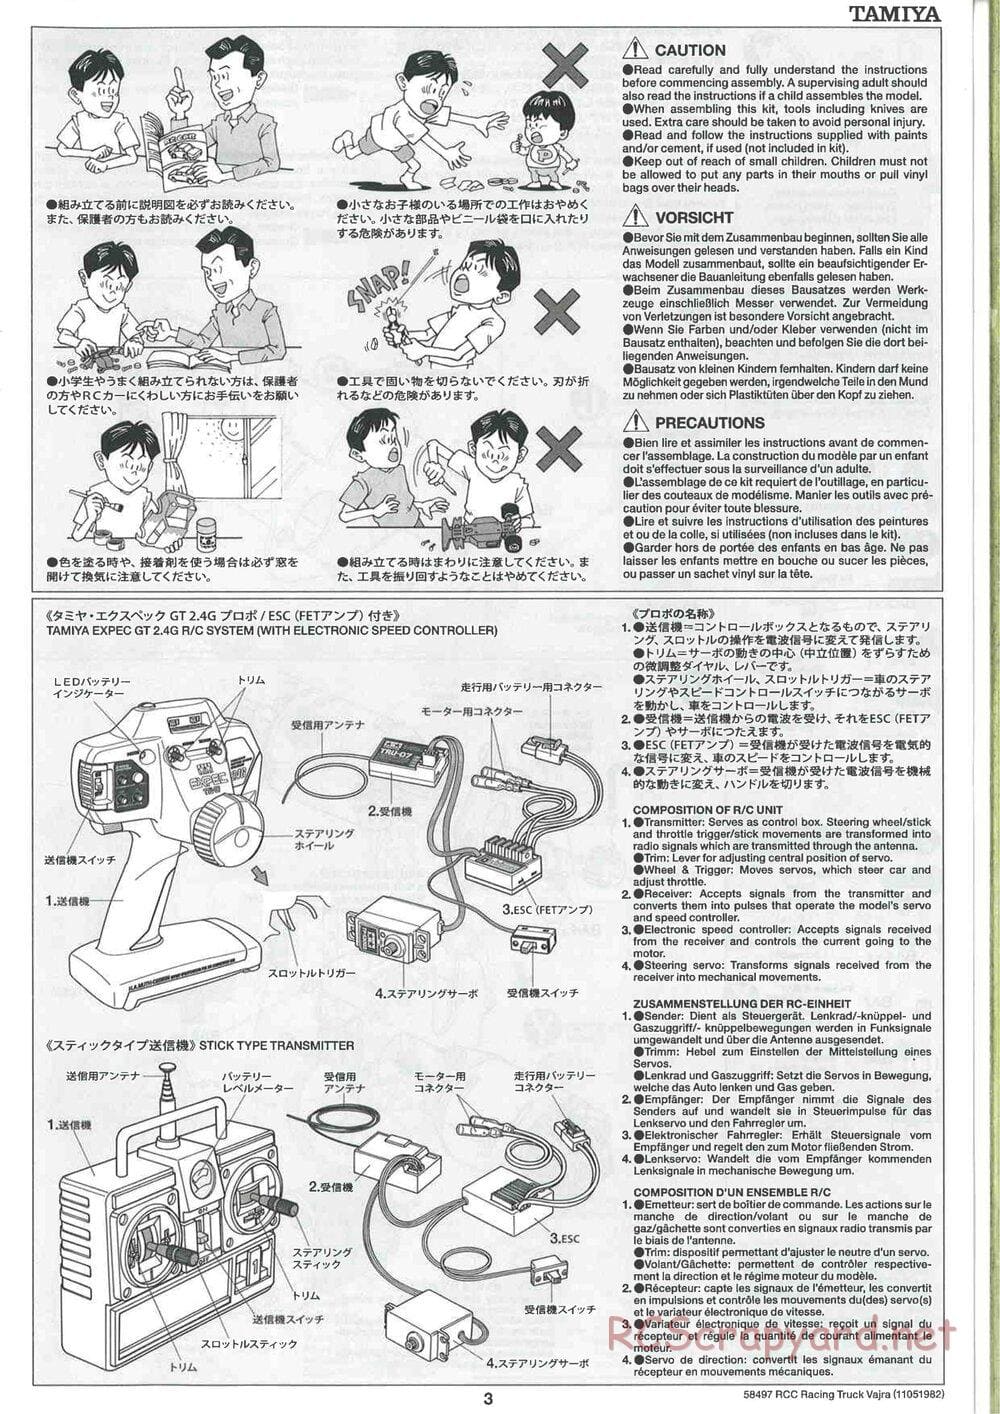 Tamiya - Vajra - AV Chassis - Manual - Page 3